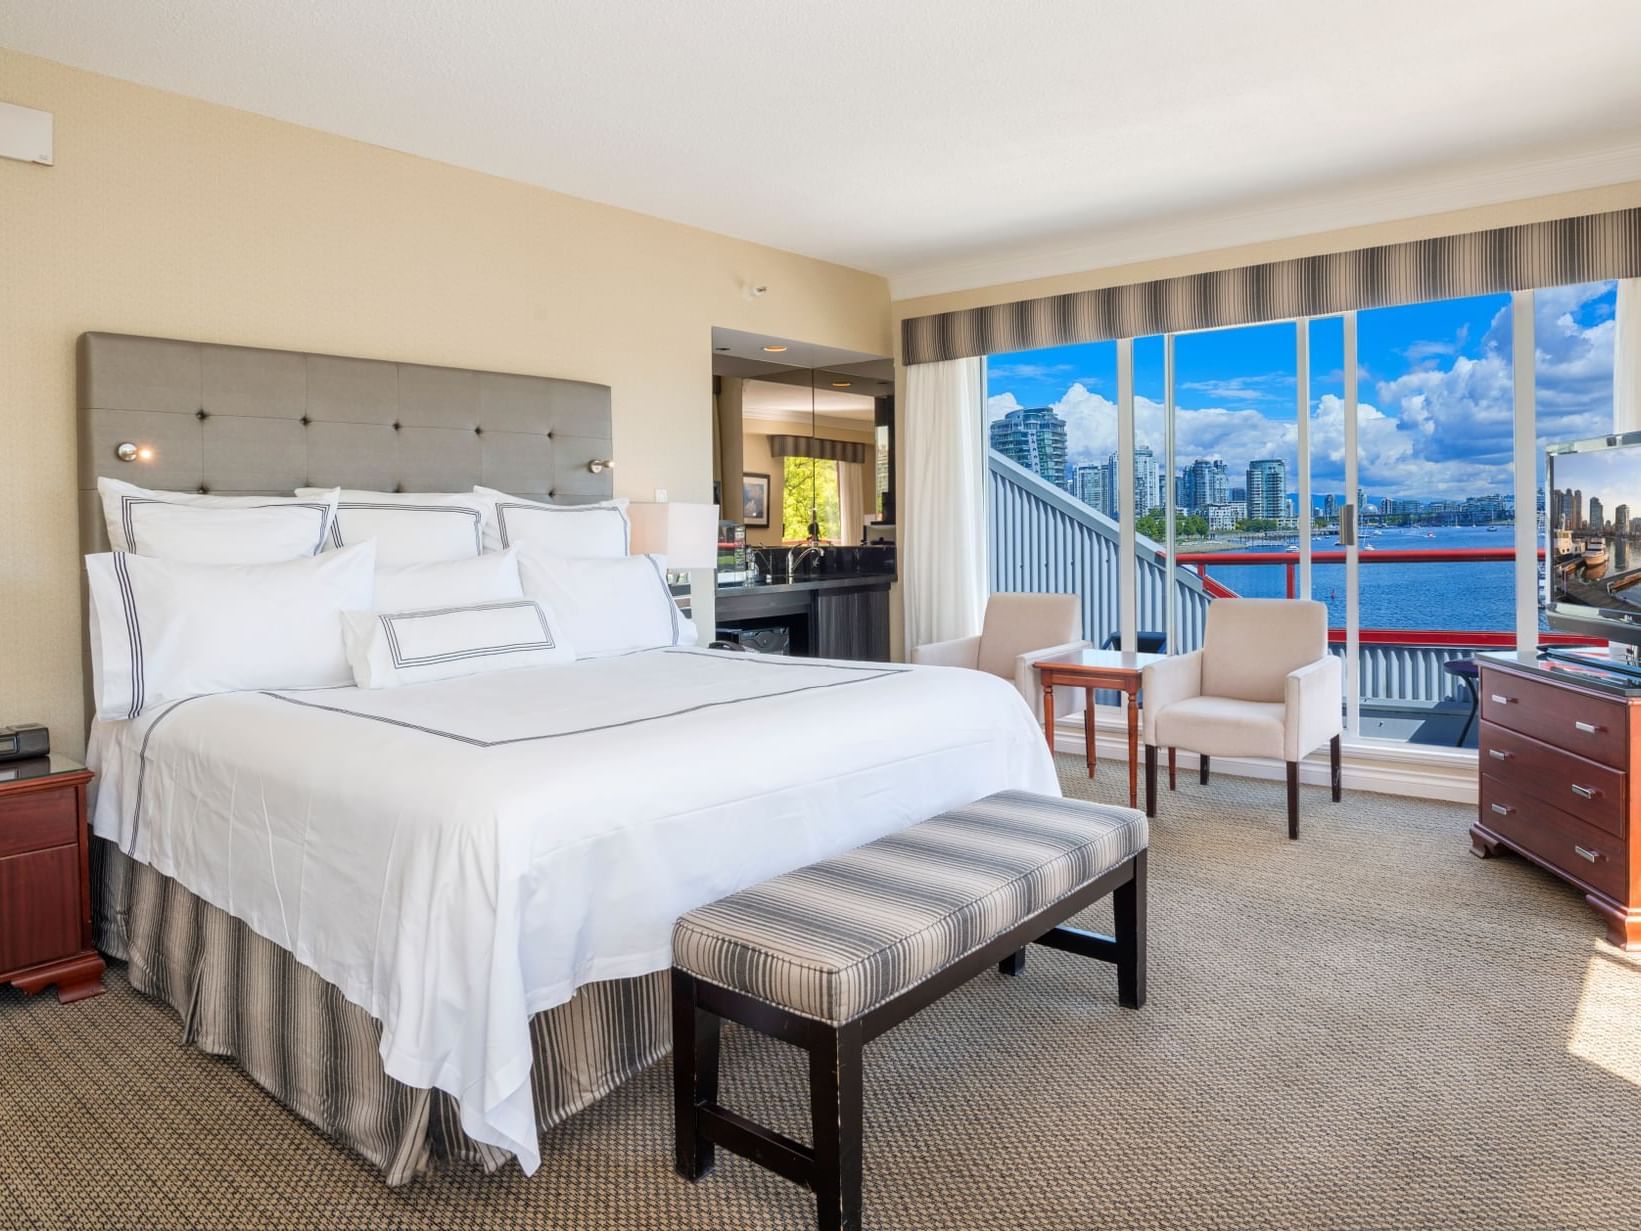 Boardwalk Suite bedroom with king bed at Granville Island Hotel